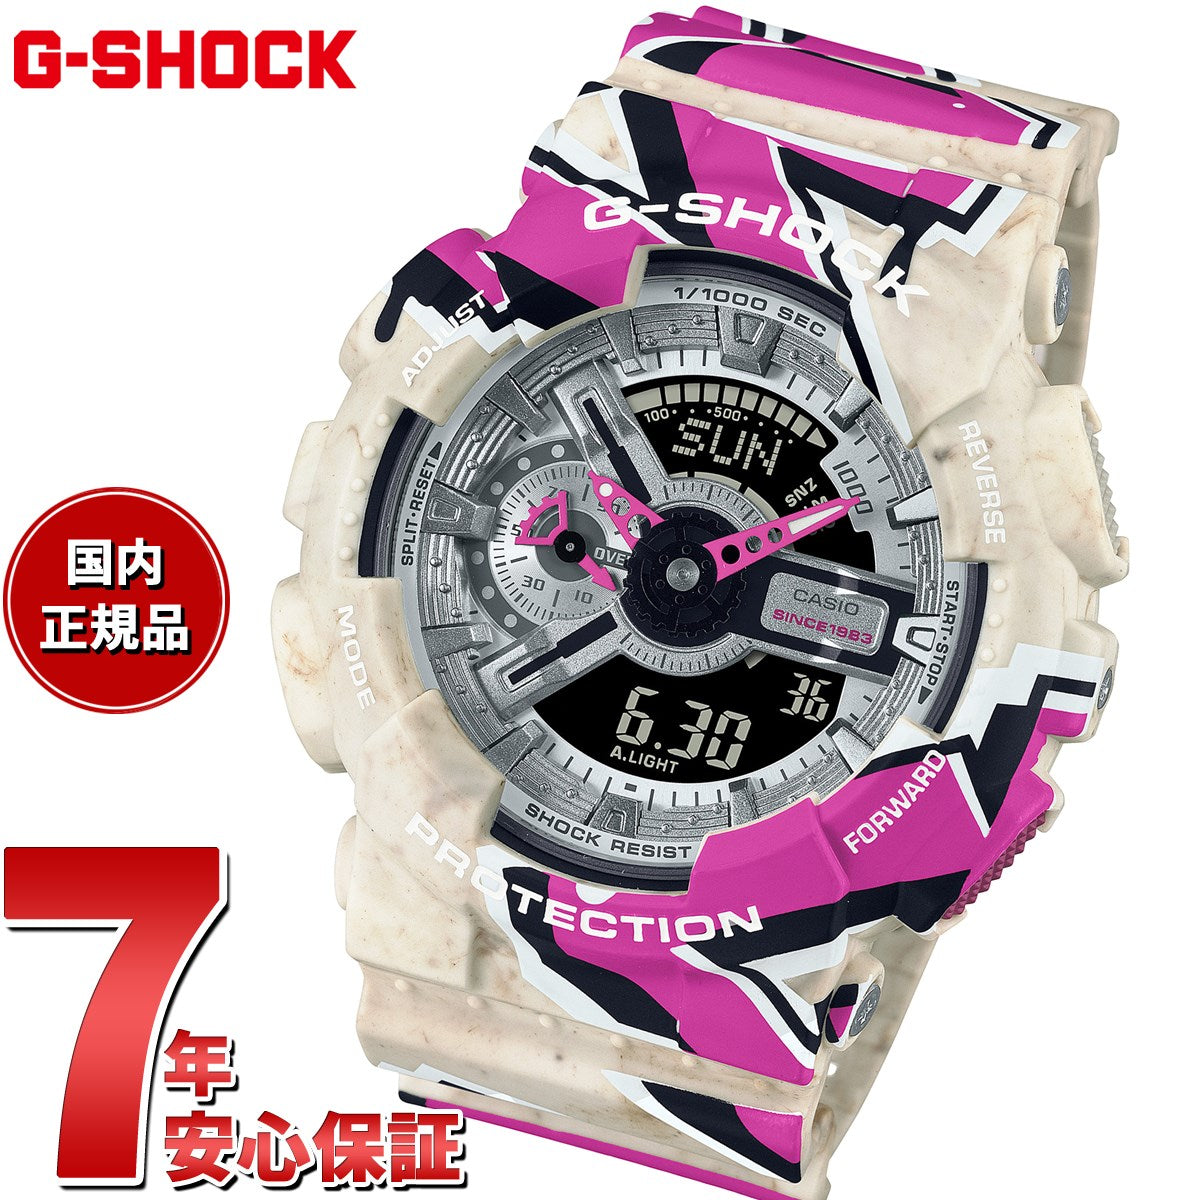 G-SHOCK アナデジ カシオ Gショック CASIO 限定モデル 腕時計 メンズ